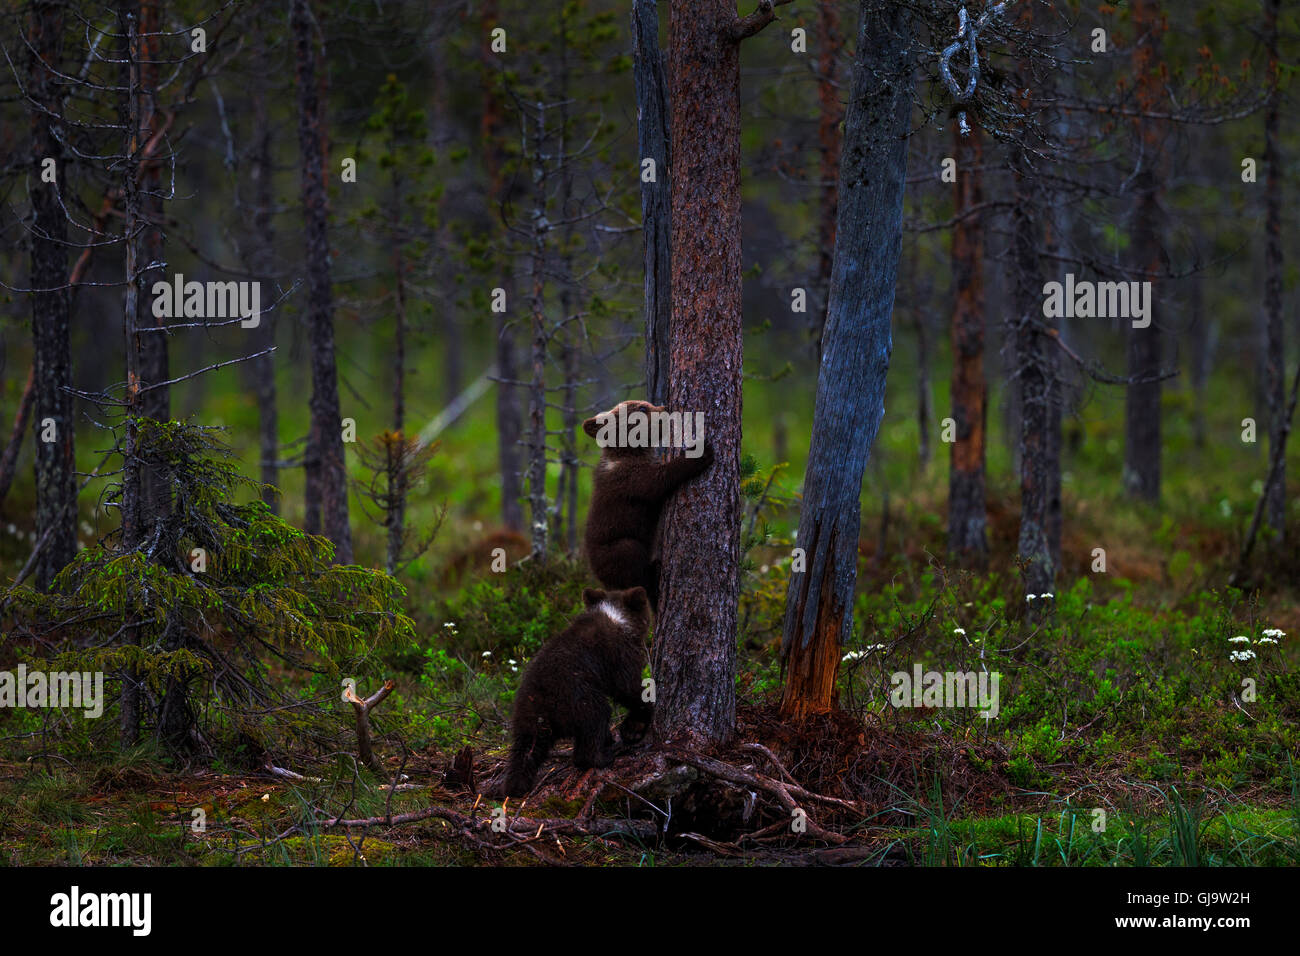 Brown bear cubs escalade un arbre, en Finlande. Banque D'Images